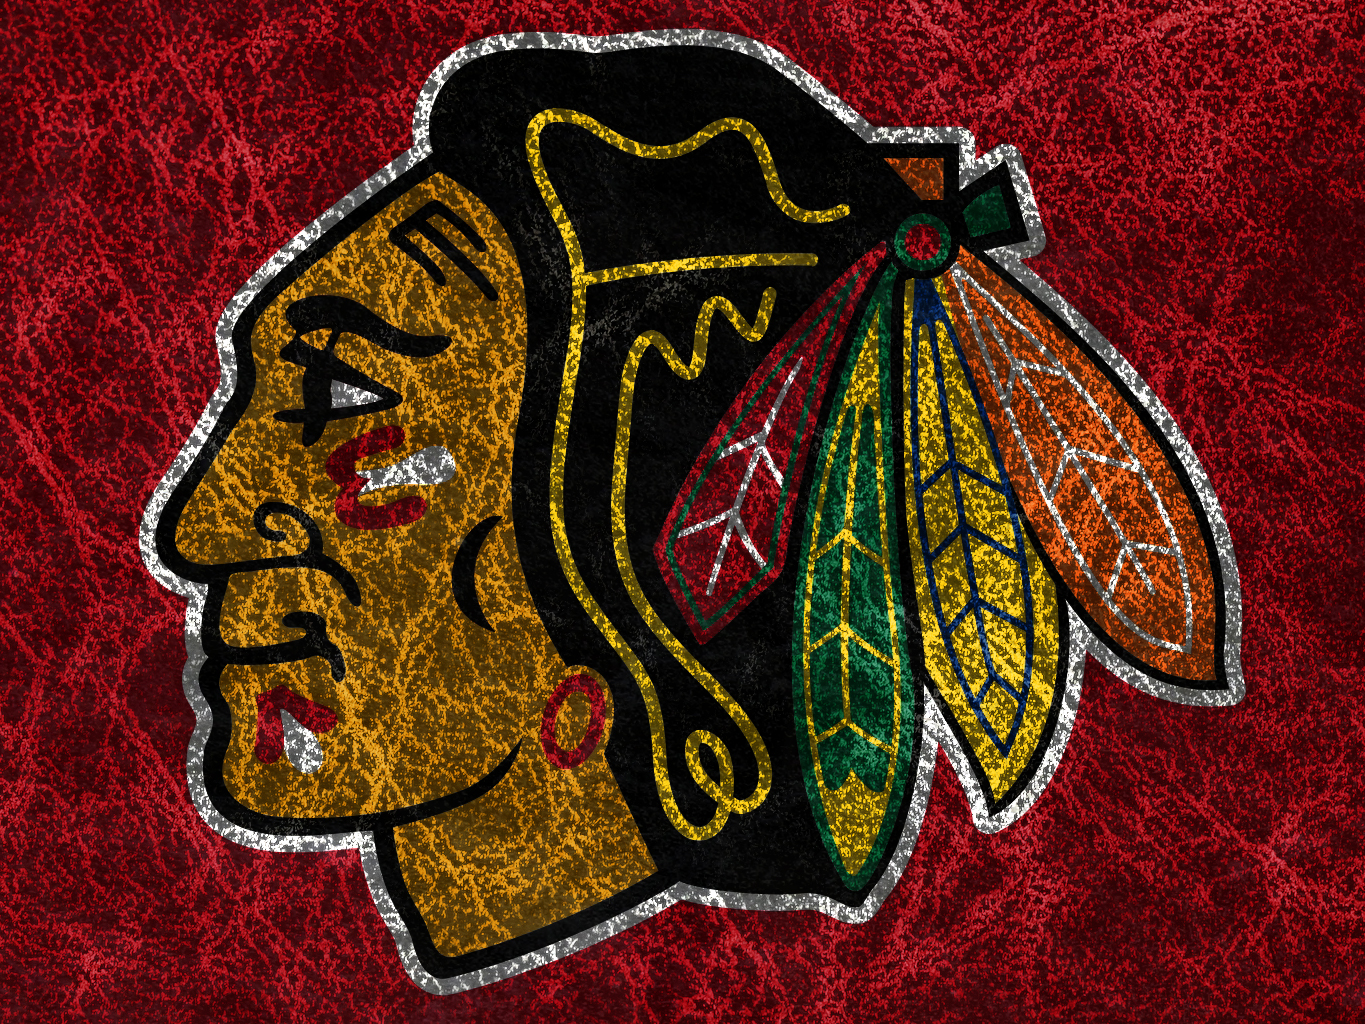 Chicago Blackhawks Background Image Wallpaper